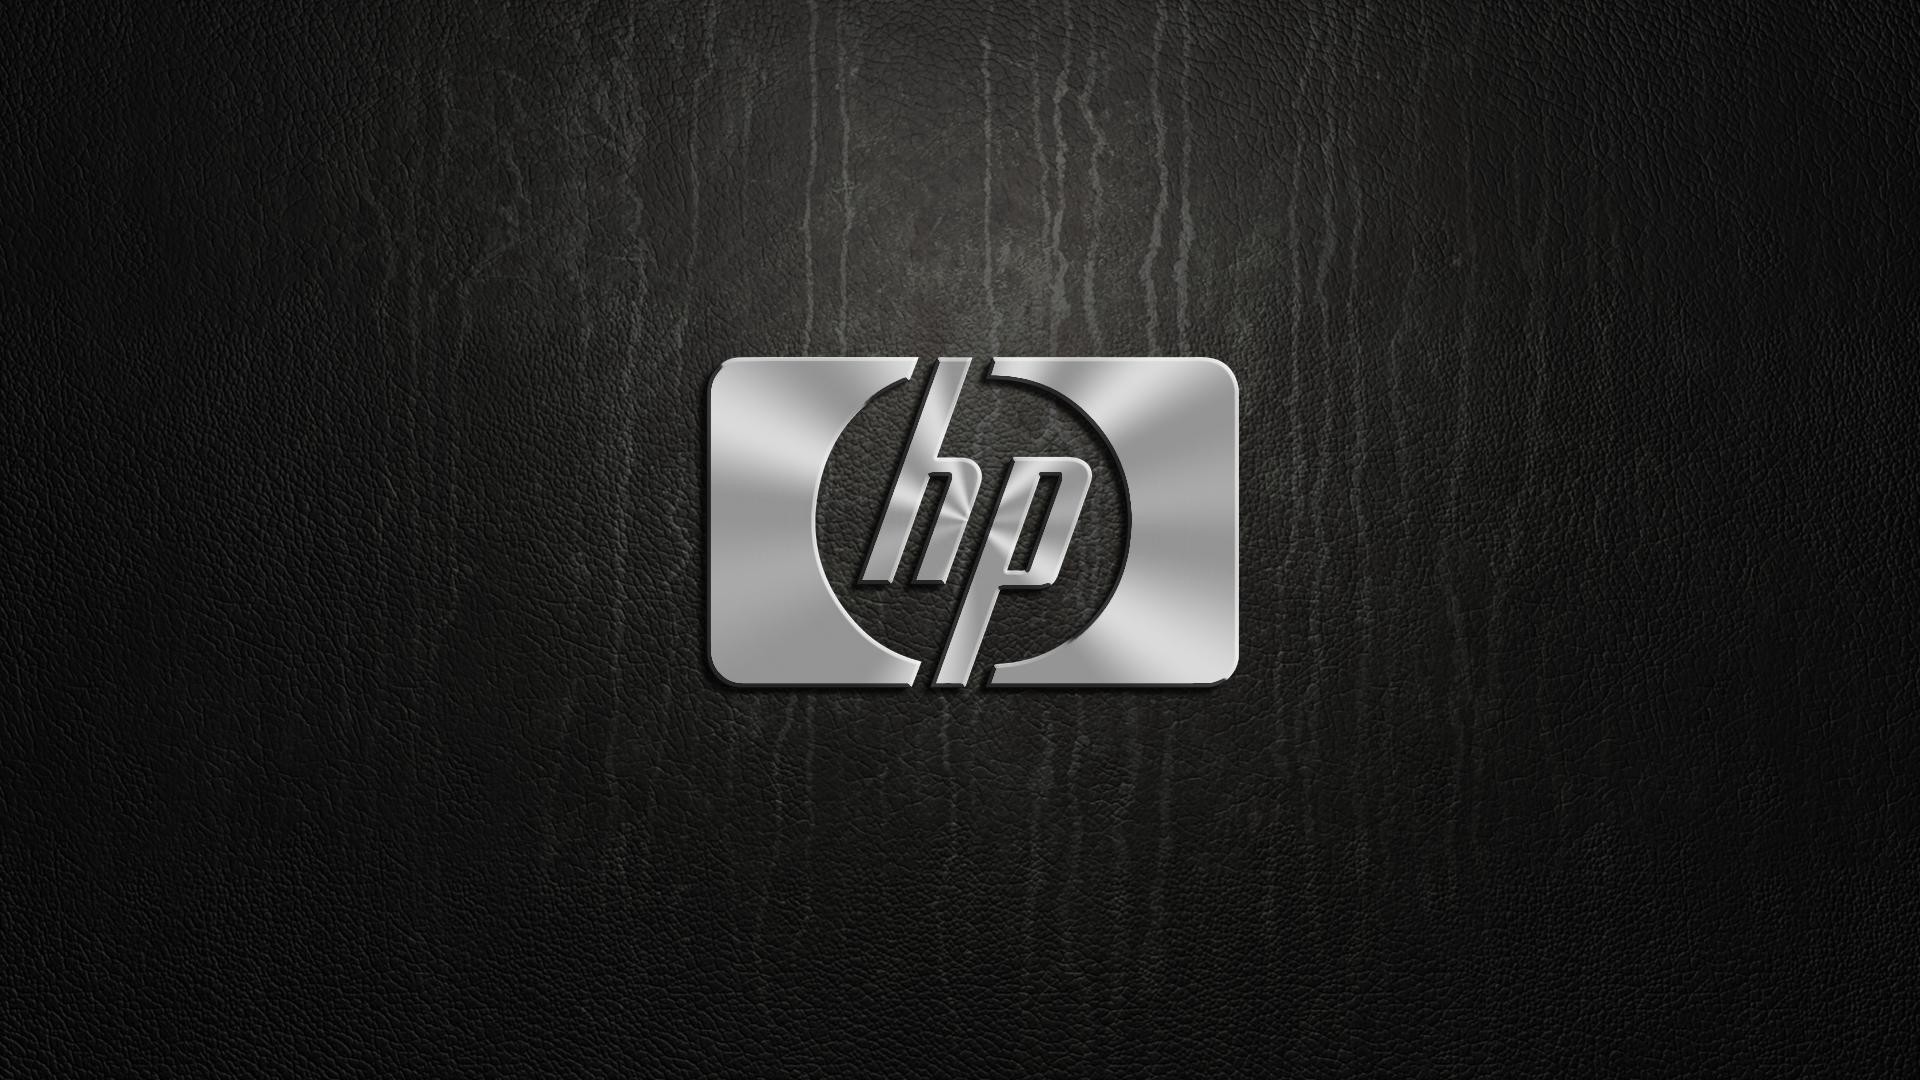 1920x1080 Hp logo - HD Wallpapers Image | HD Wallpapers Image